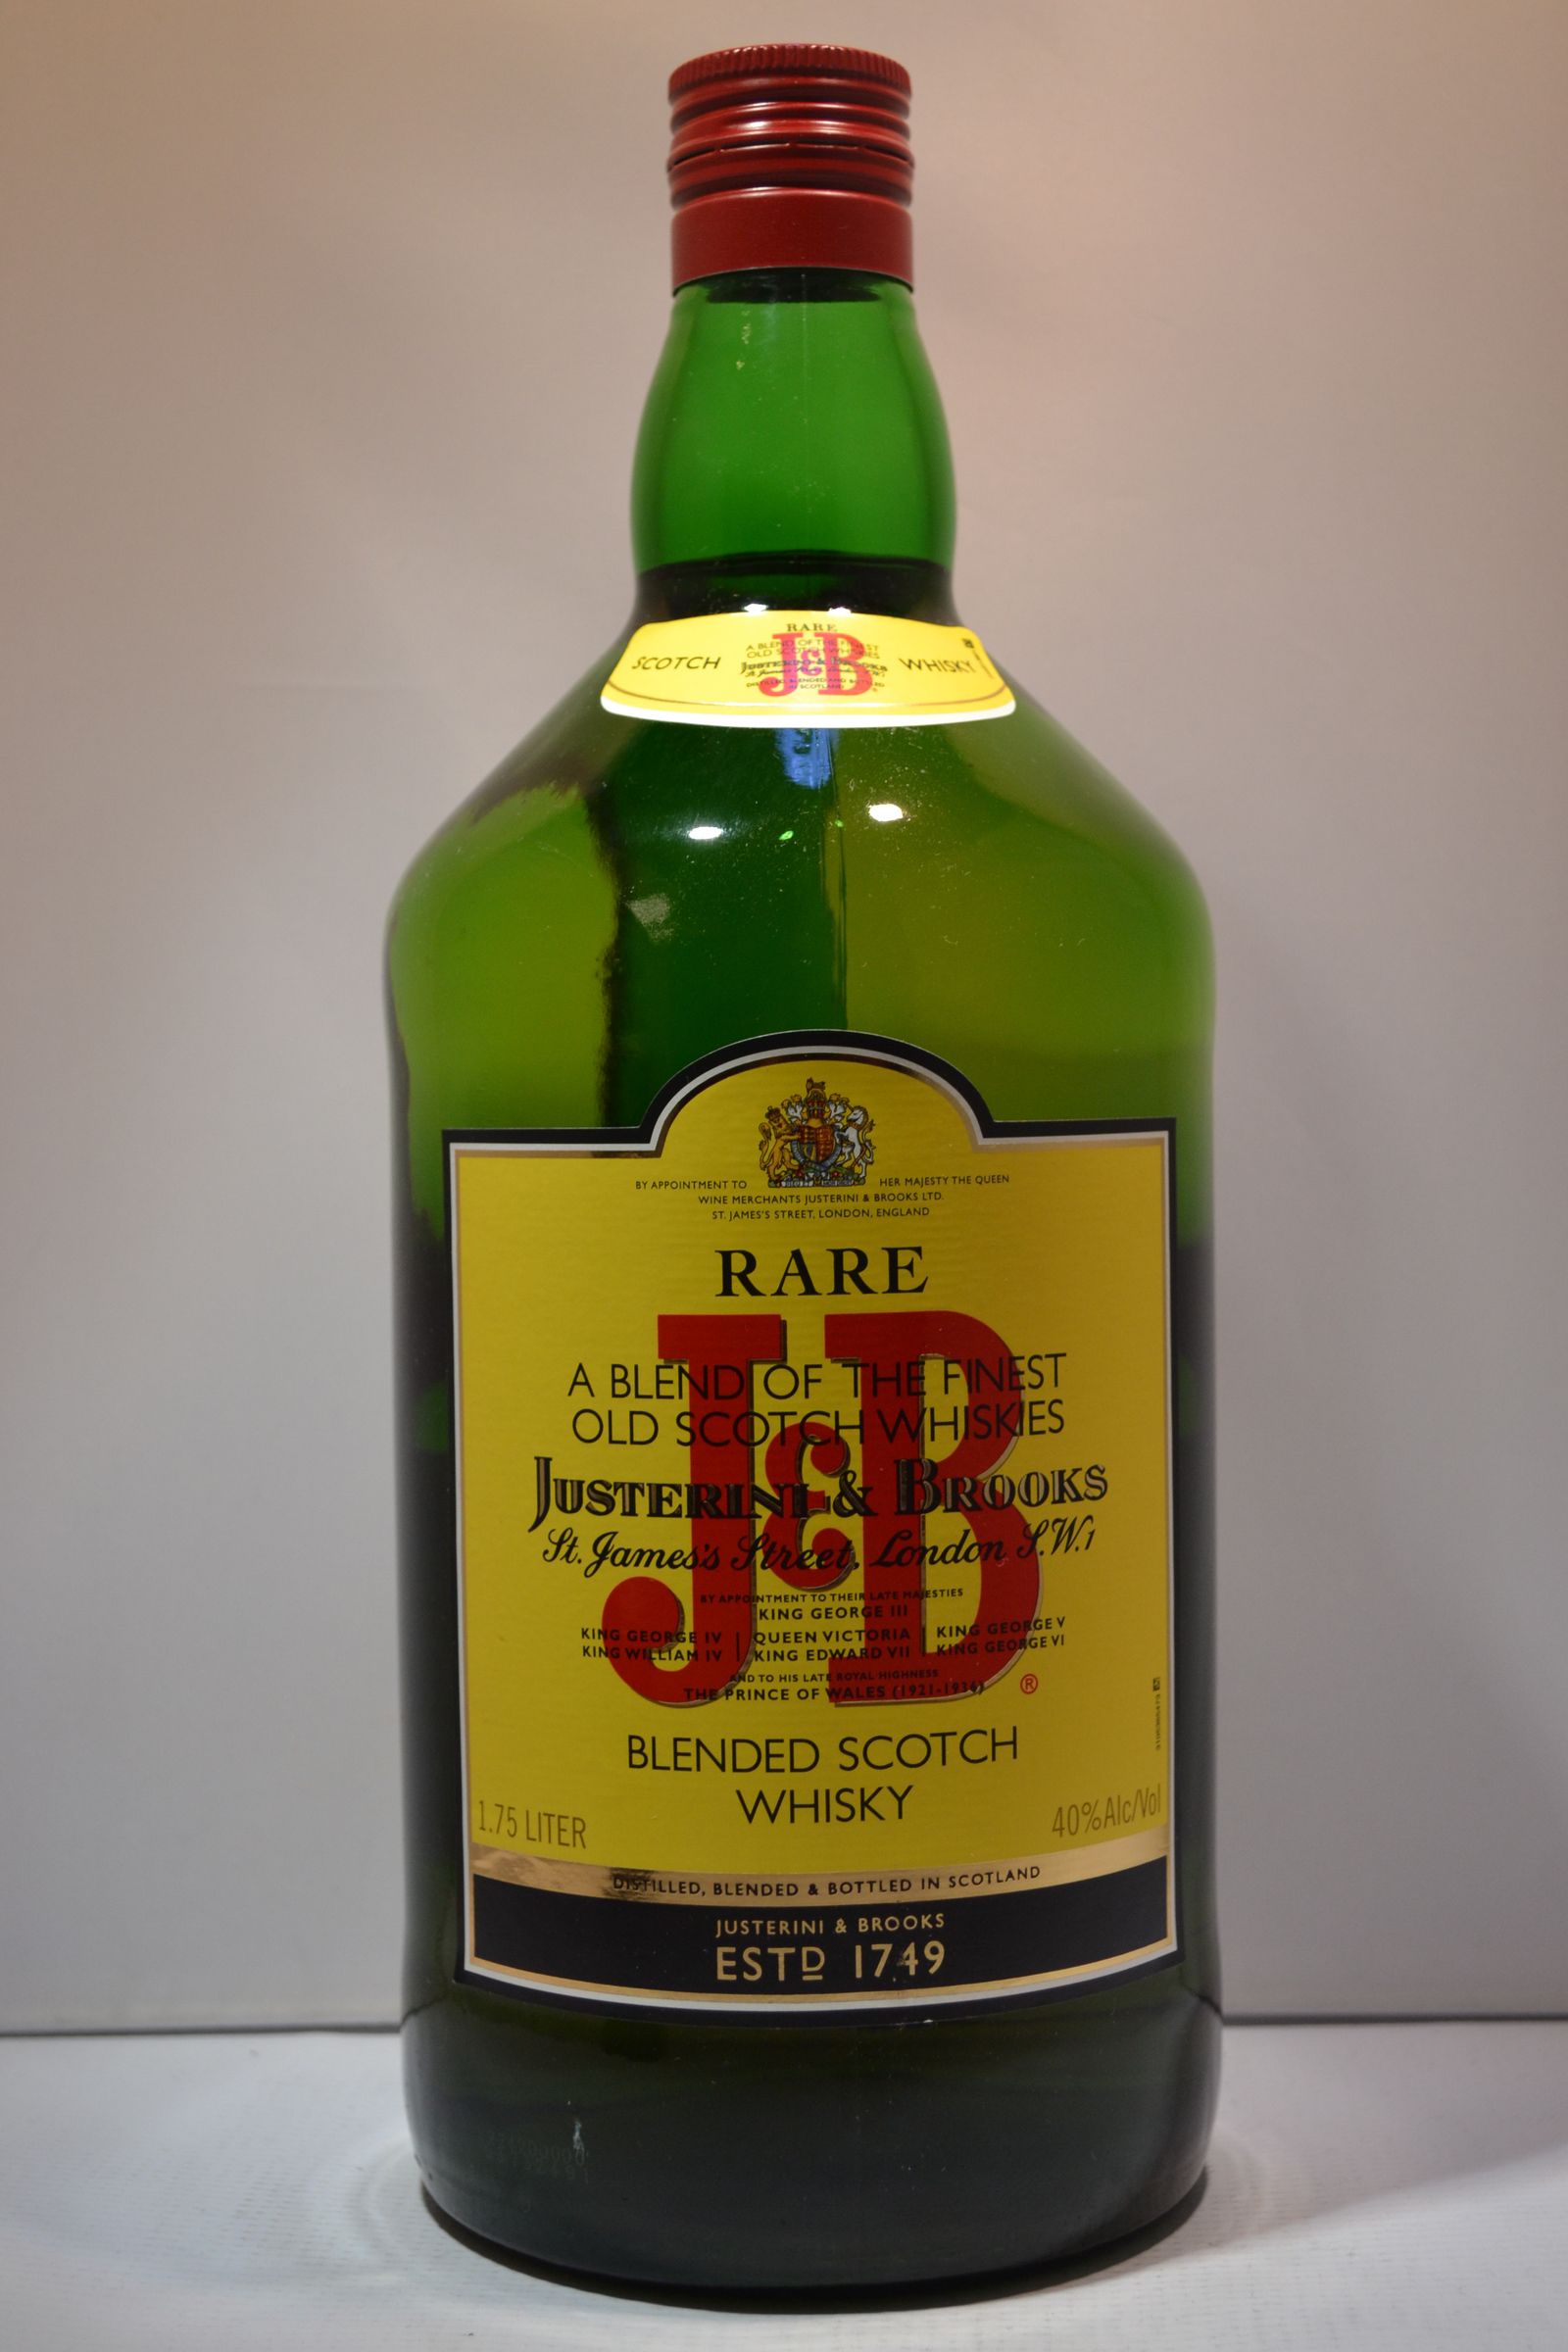 Justerini & Brooks Whisky, Blended Scotch - 1.75 lt